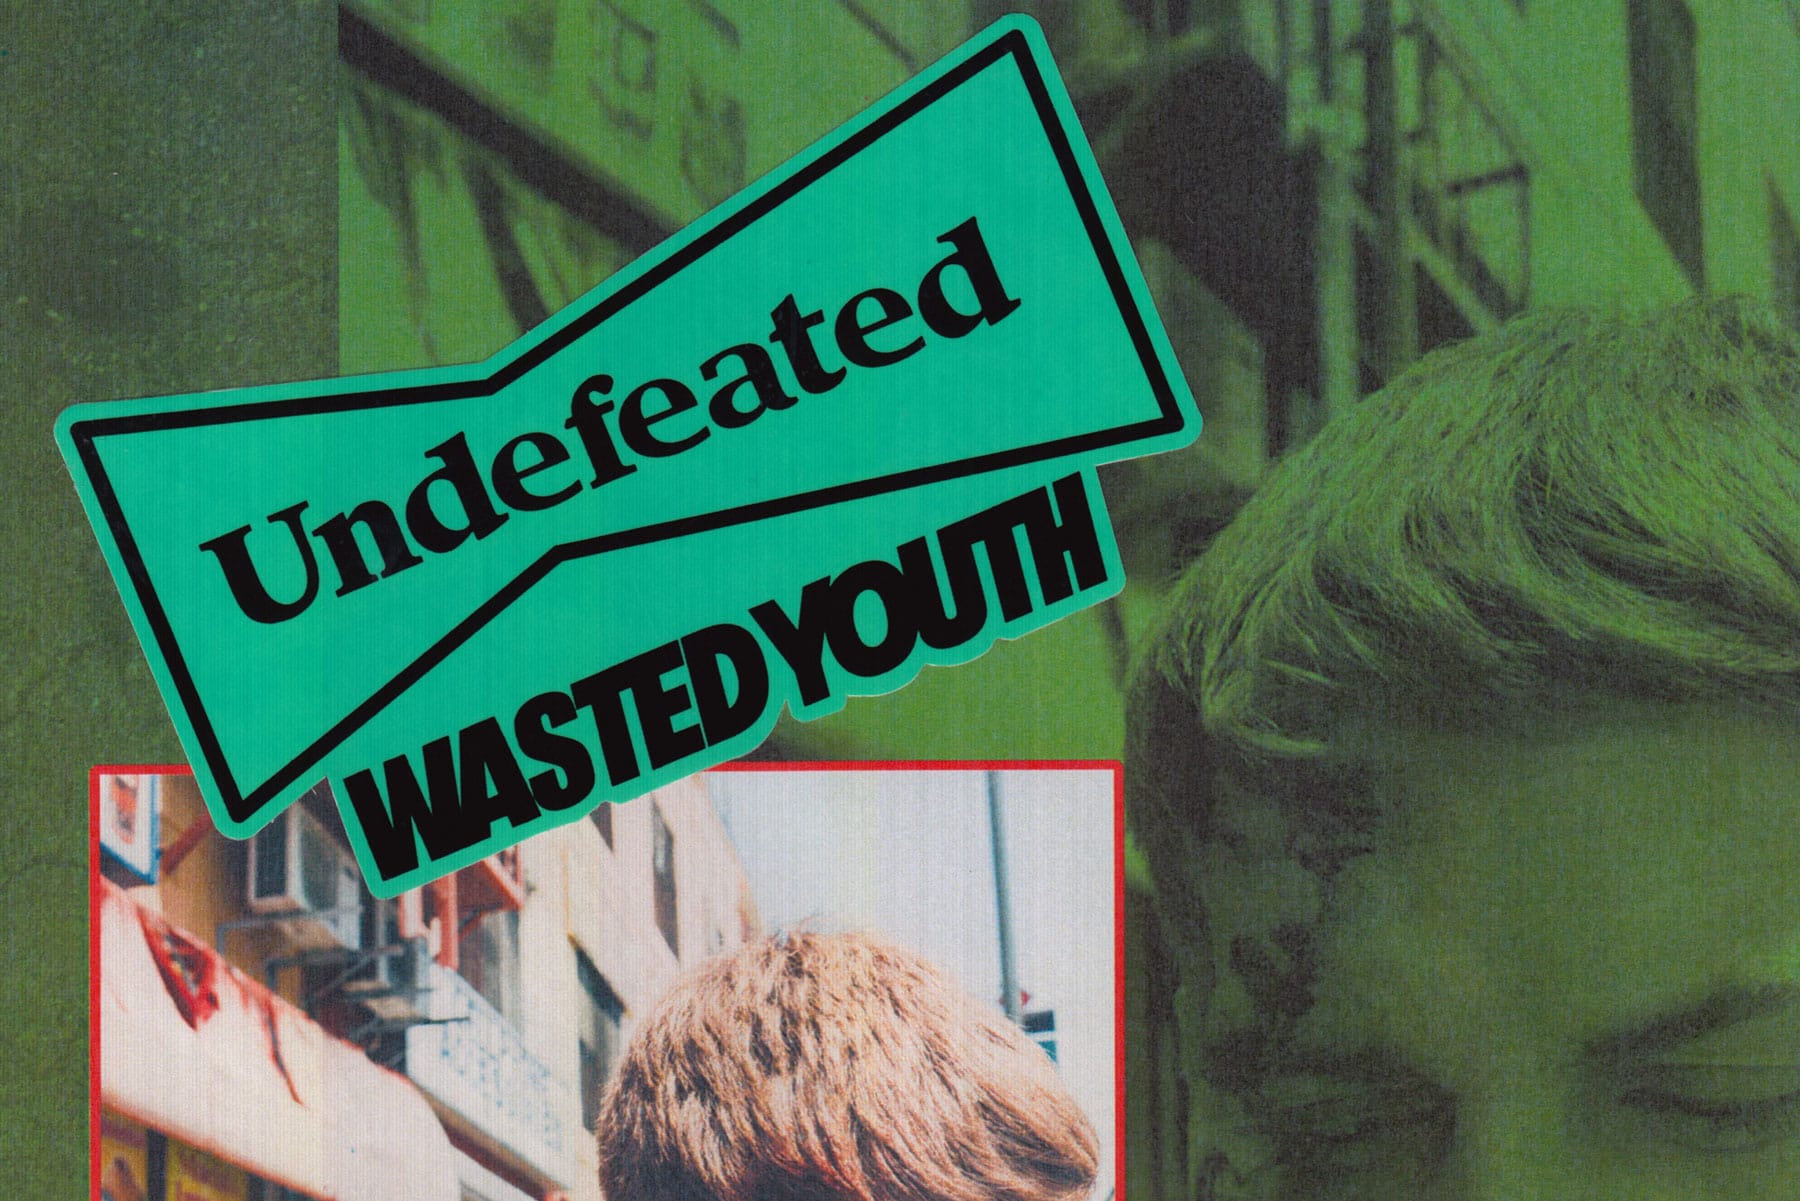 Wasted Youth x UNDEFEATED Harajuku Lookbook | HYPEBEAST